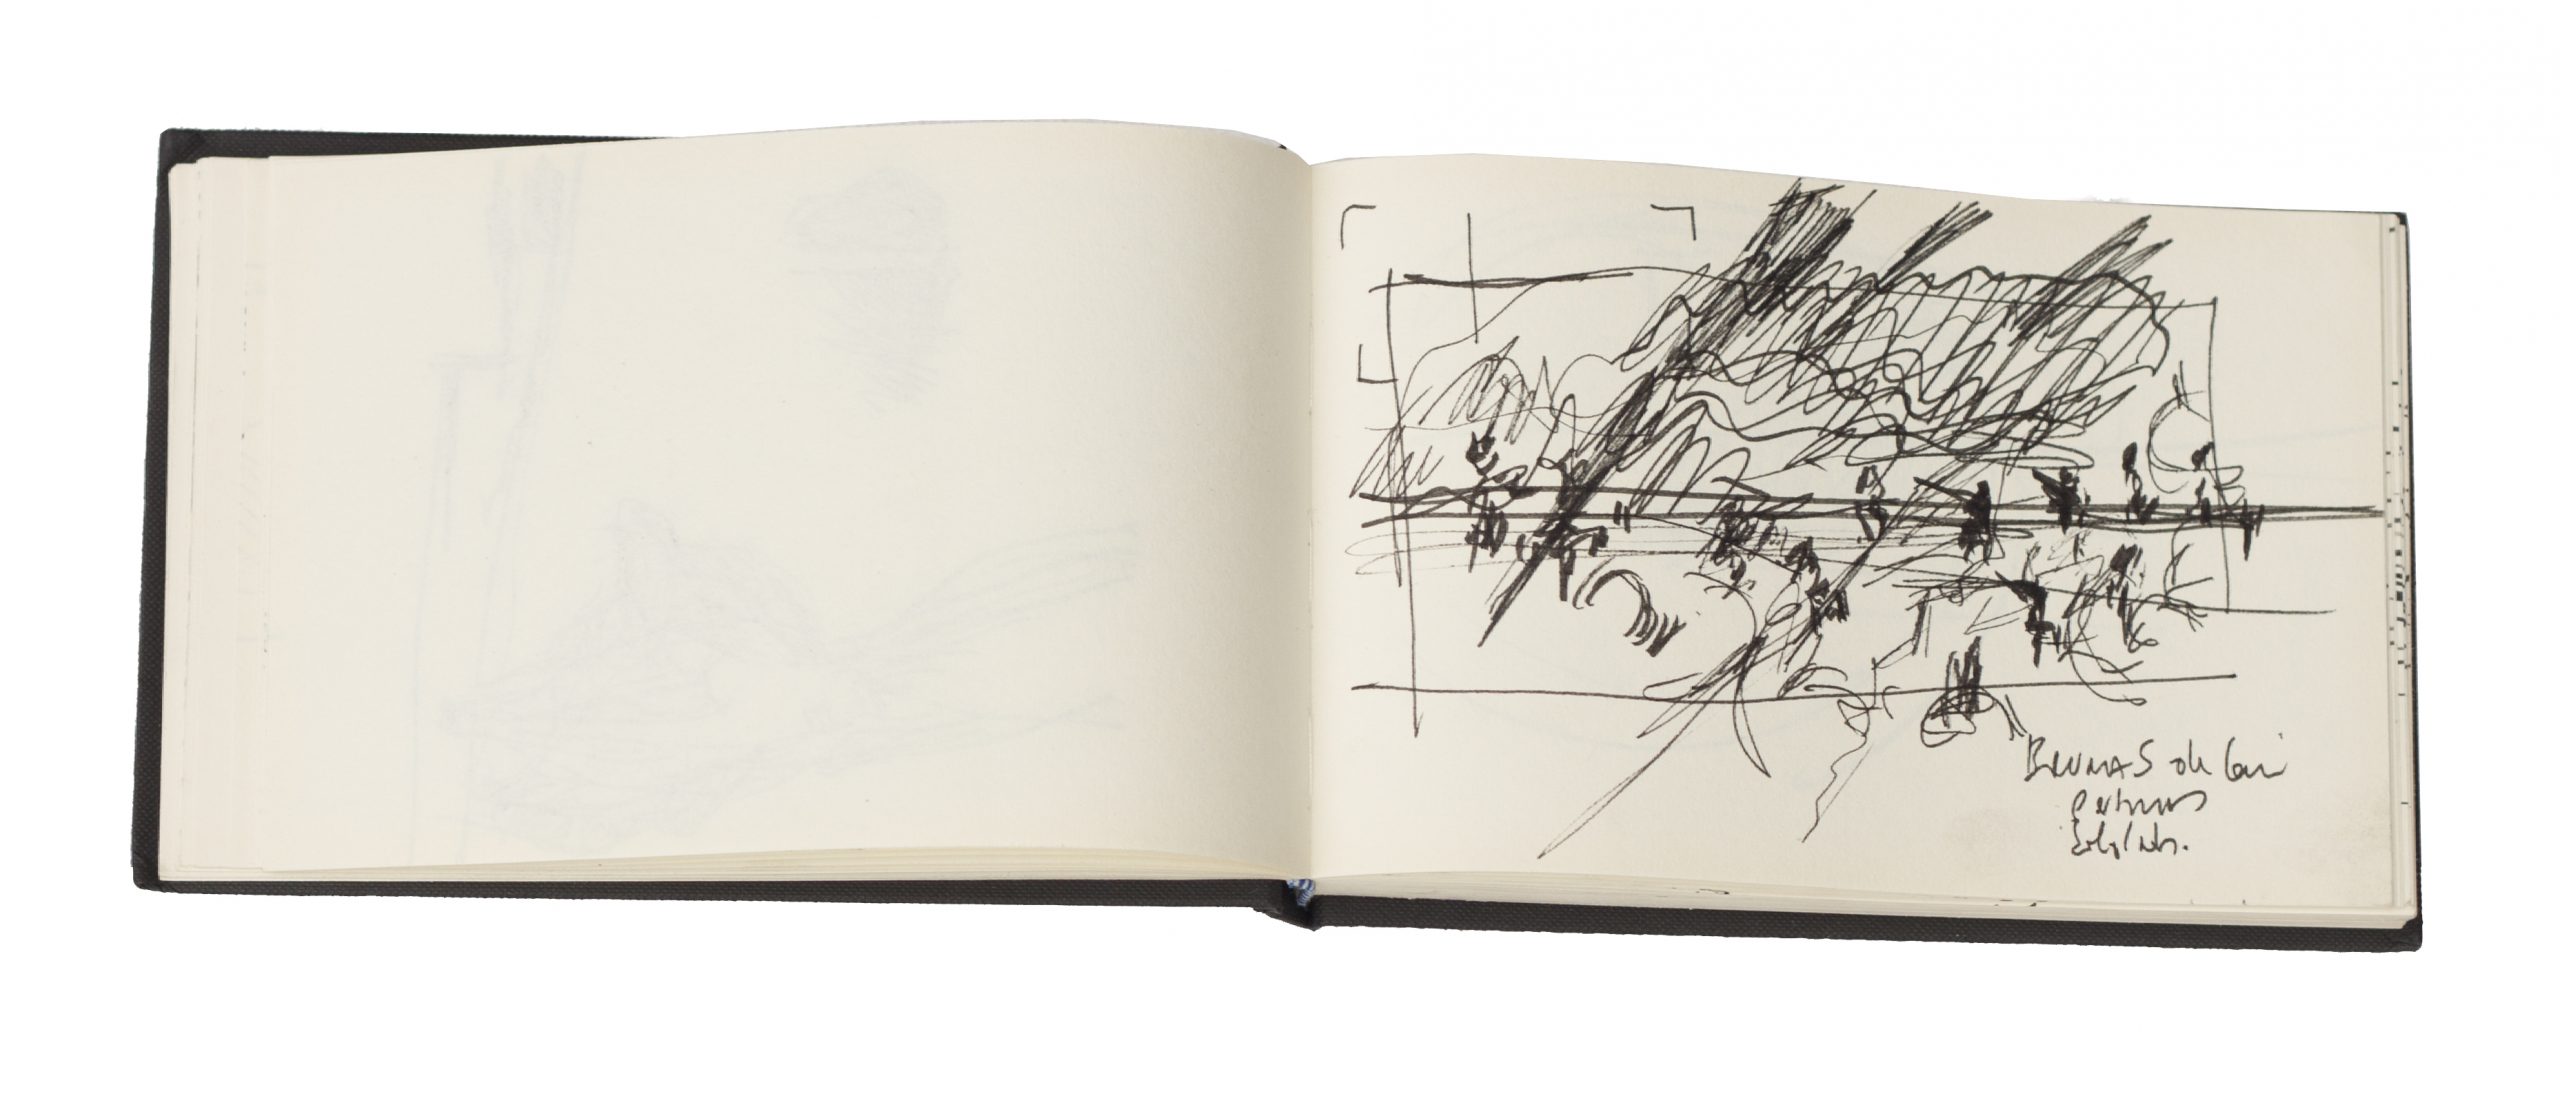 Cuaderno de dibujos 4, 2016. Cerrado 22cm x 15cm, abierto 44cm x 15cm. Técnica: Tinta china sobre papel.